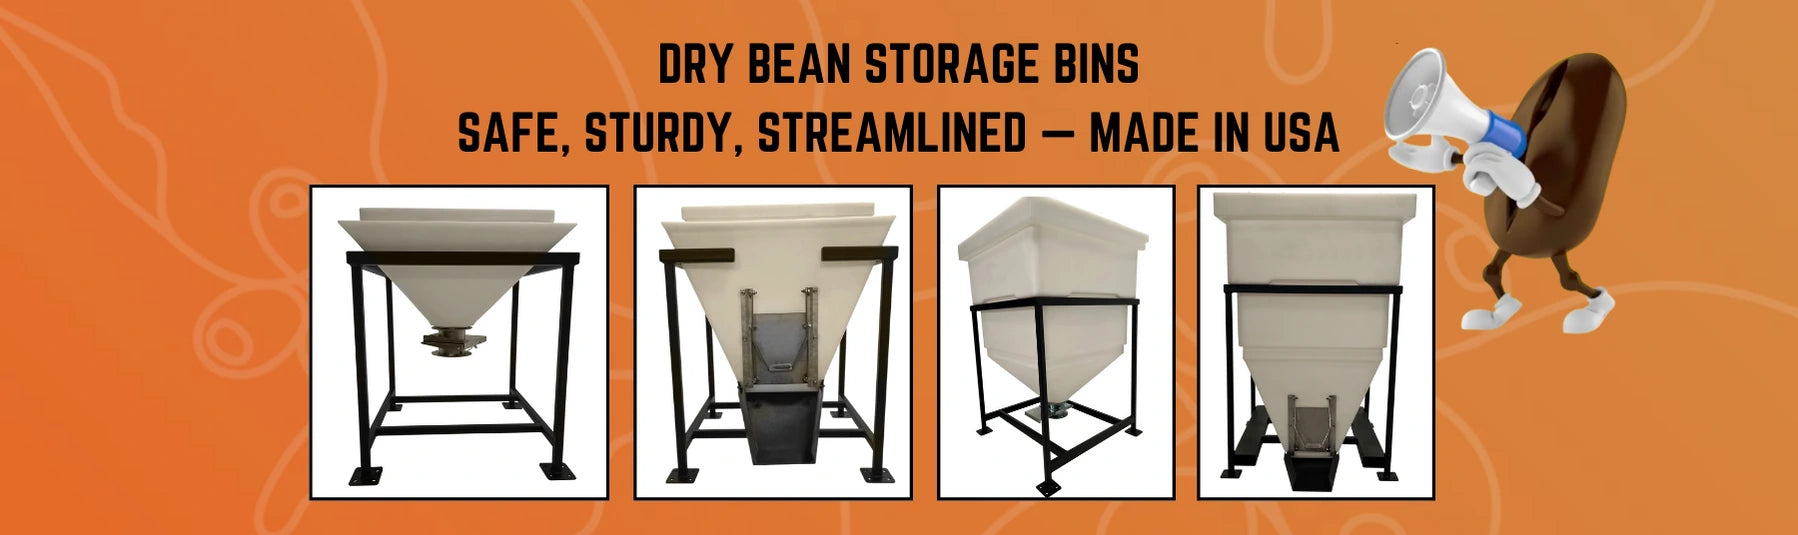 PRODUCT SPOTLIGHT: Dry Bean Storage Bins